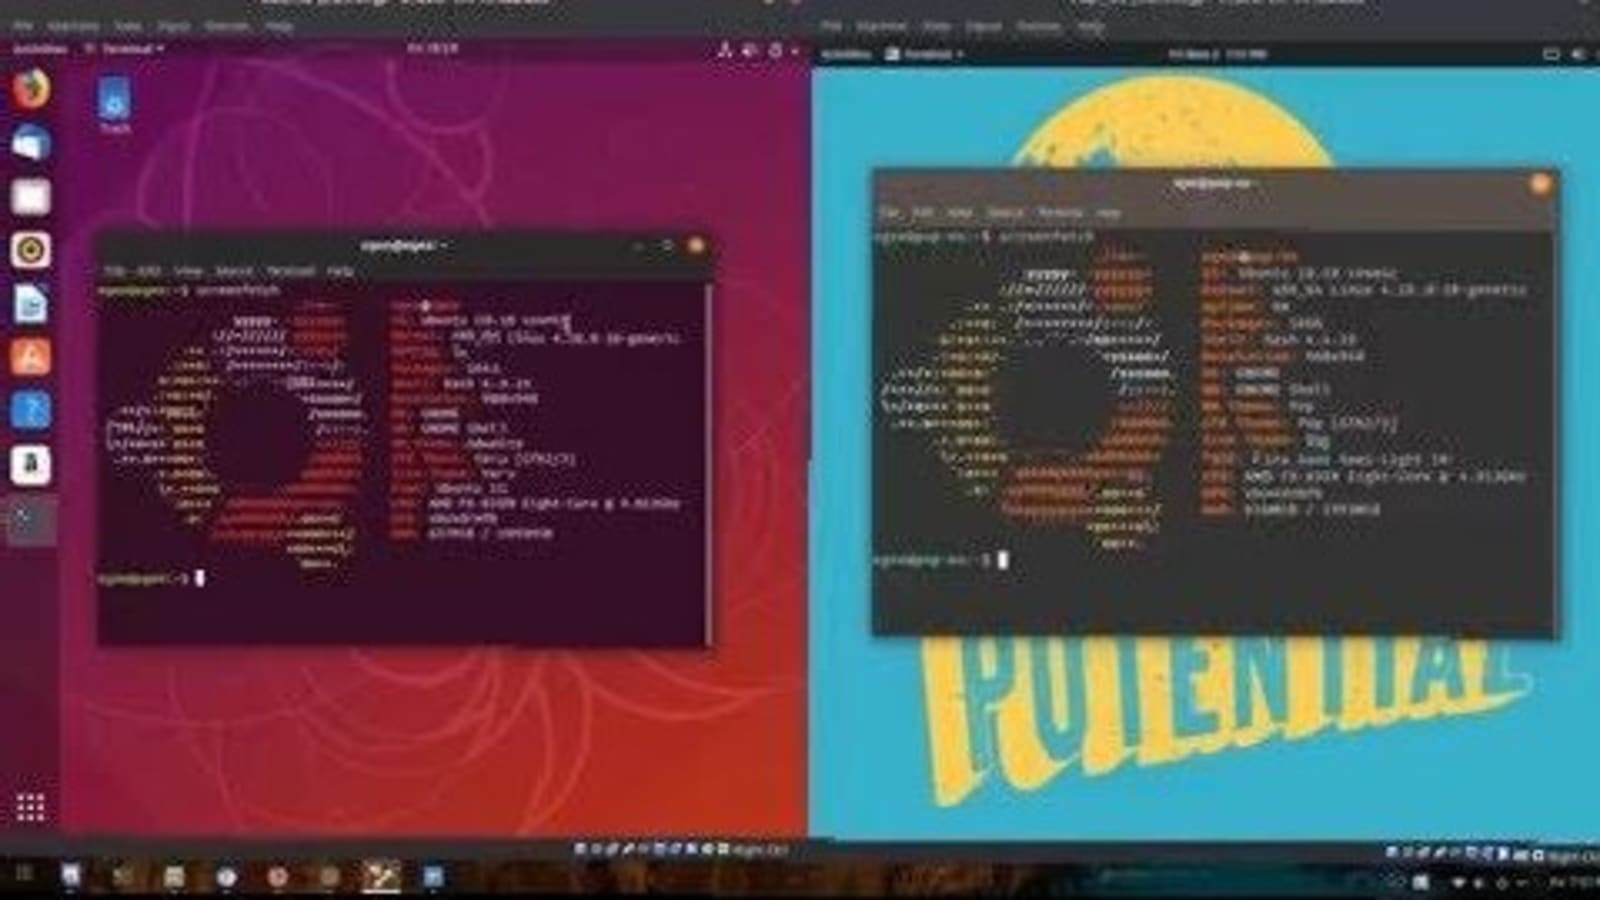 with OS rather than ubuntu? - DEV Community